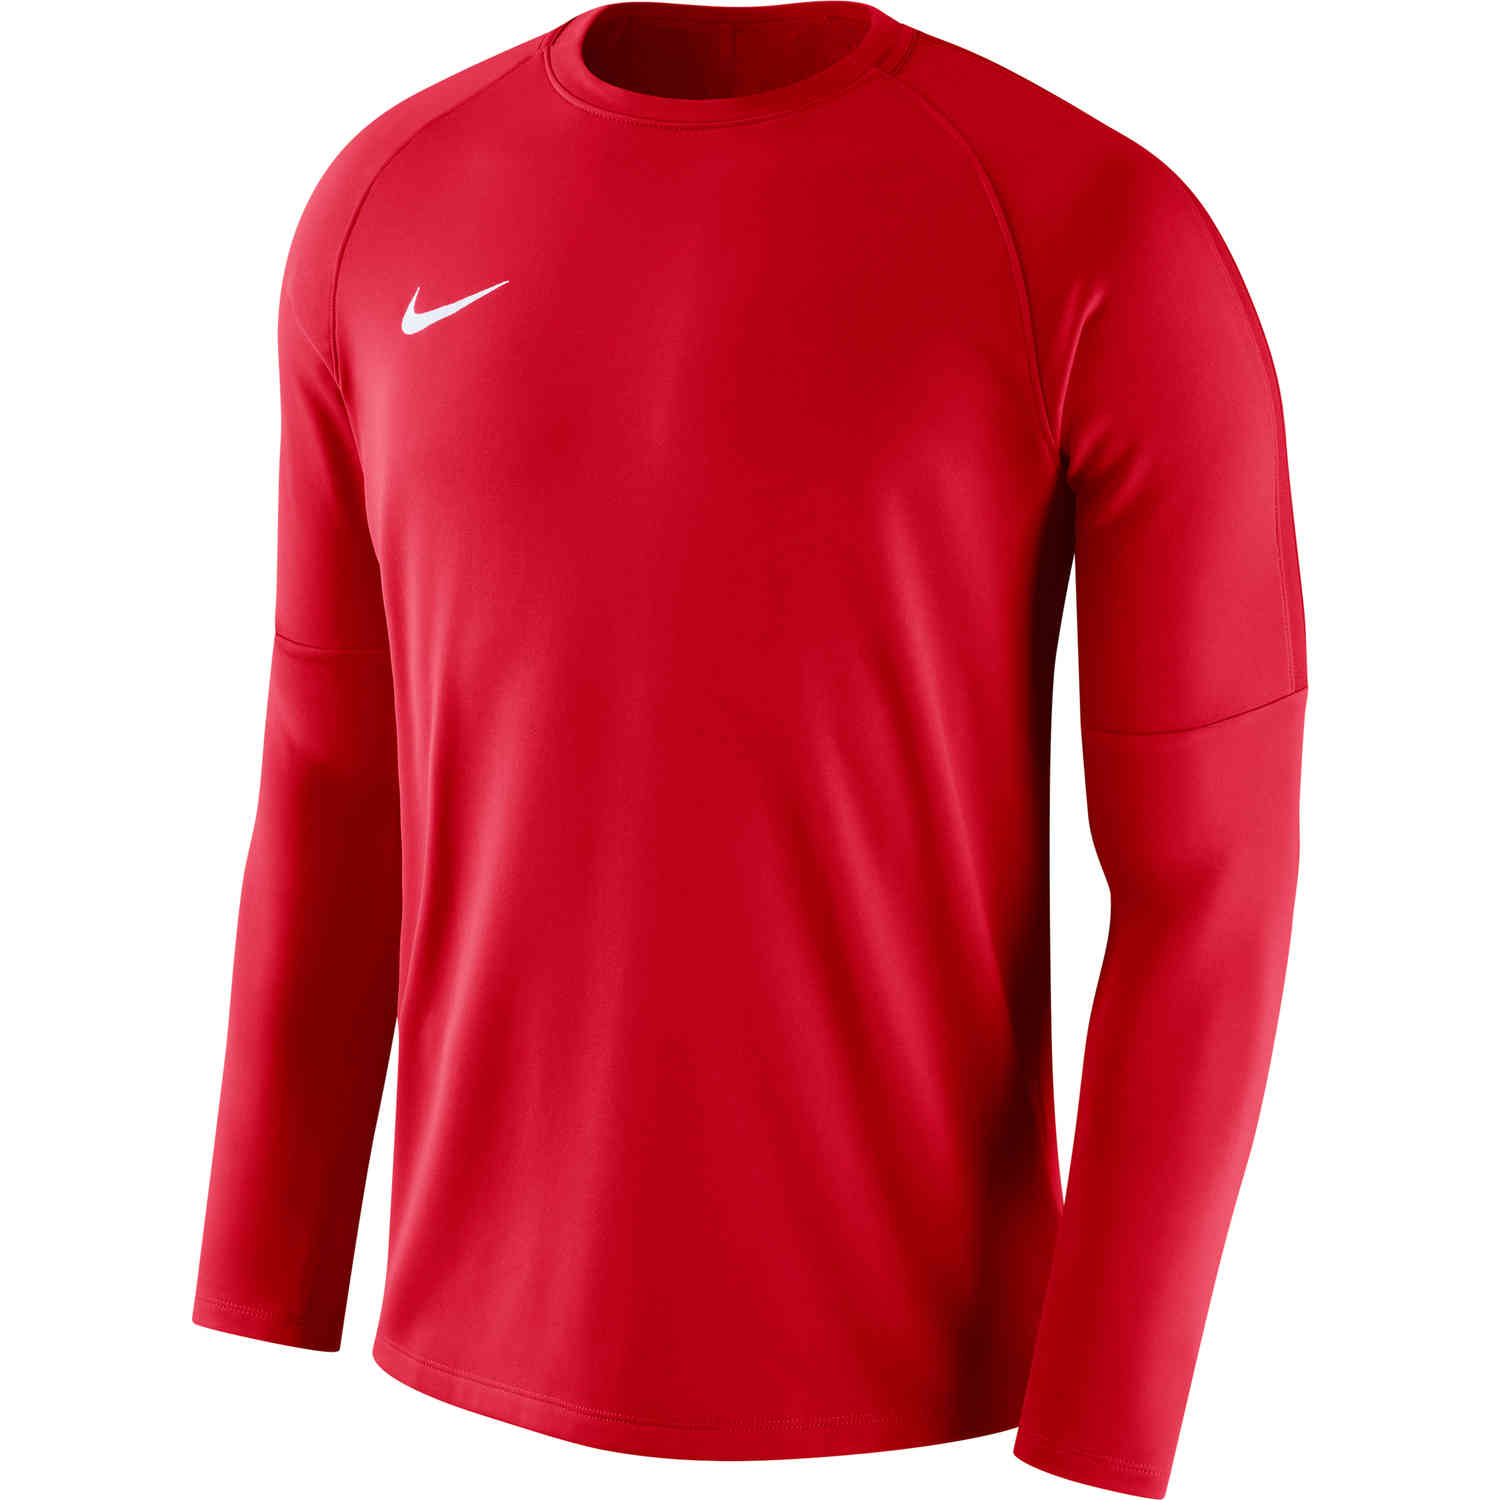 Nike Academy18 Crew - University Red - SoccerPro